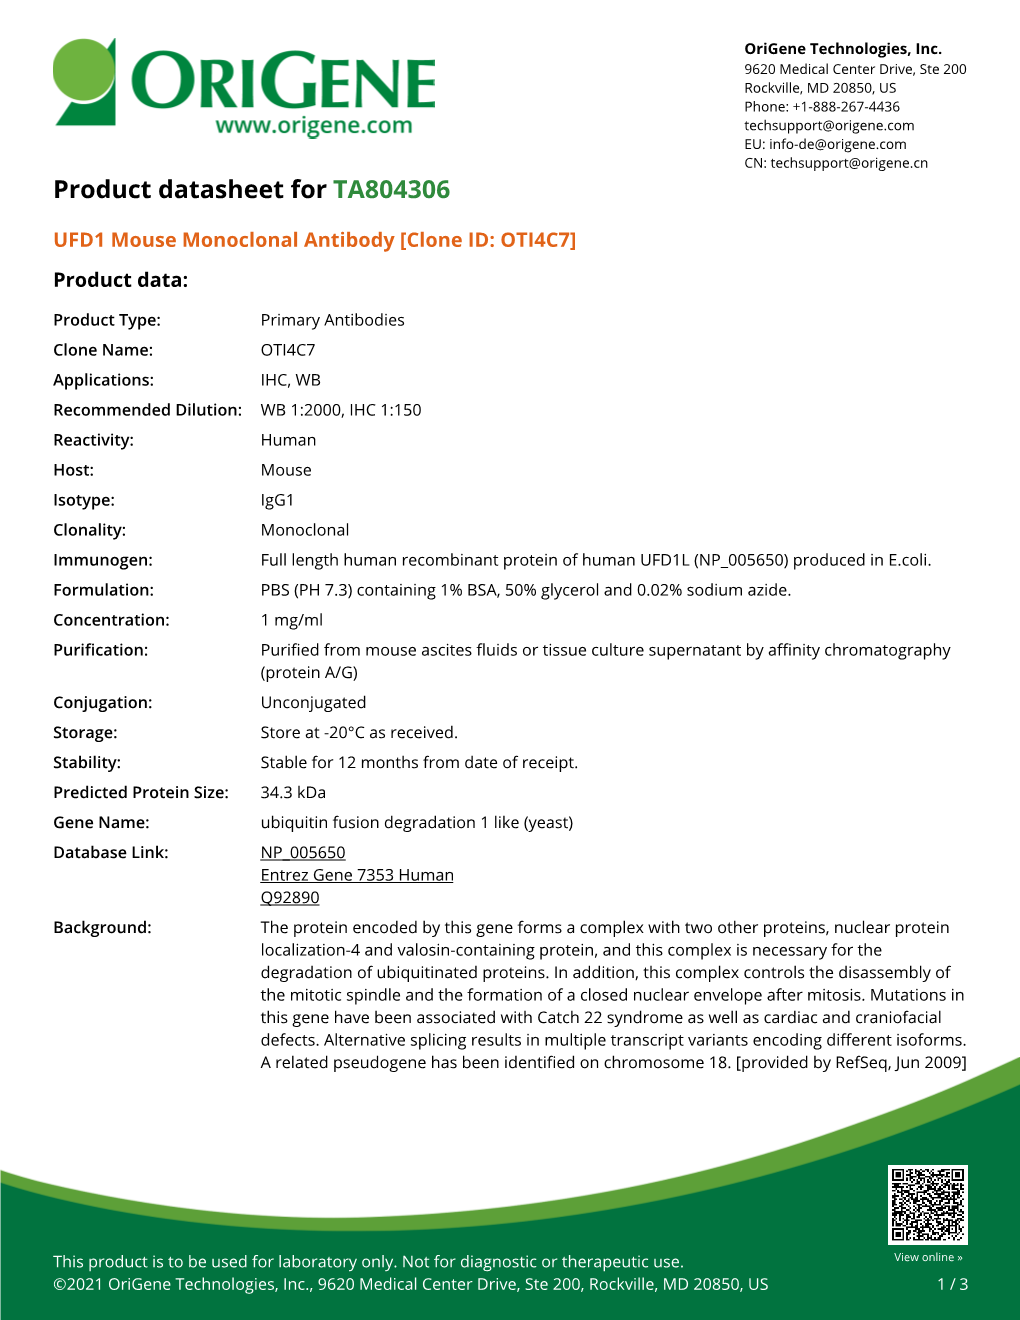 UFD1 Mouse Monoclonal Antibody [Clone ID: OTI4C7] Product Data